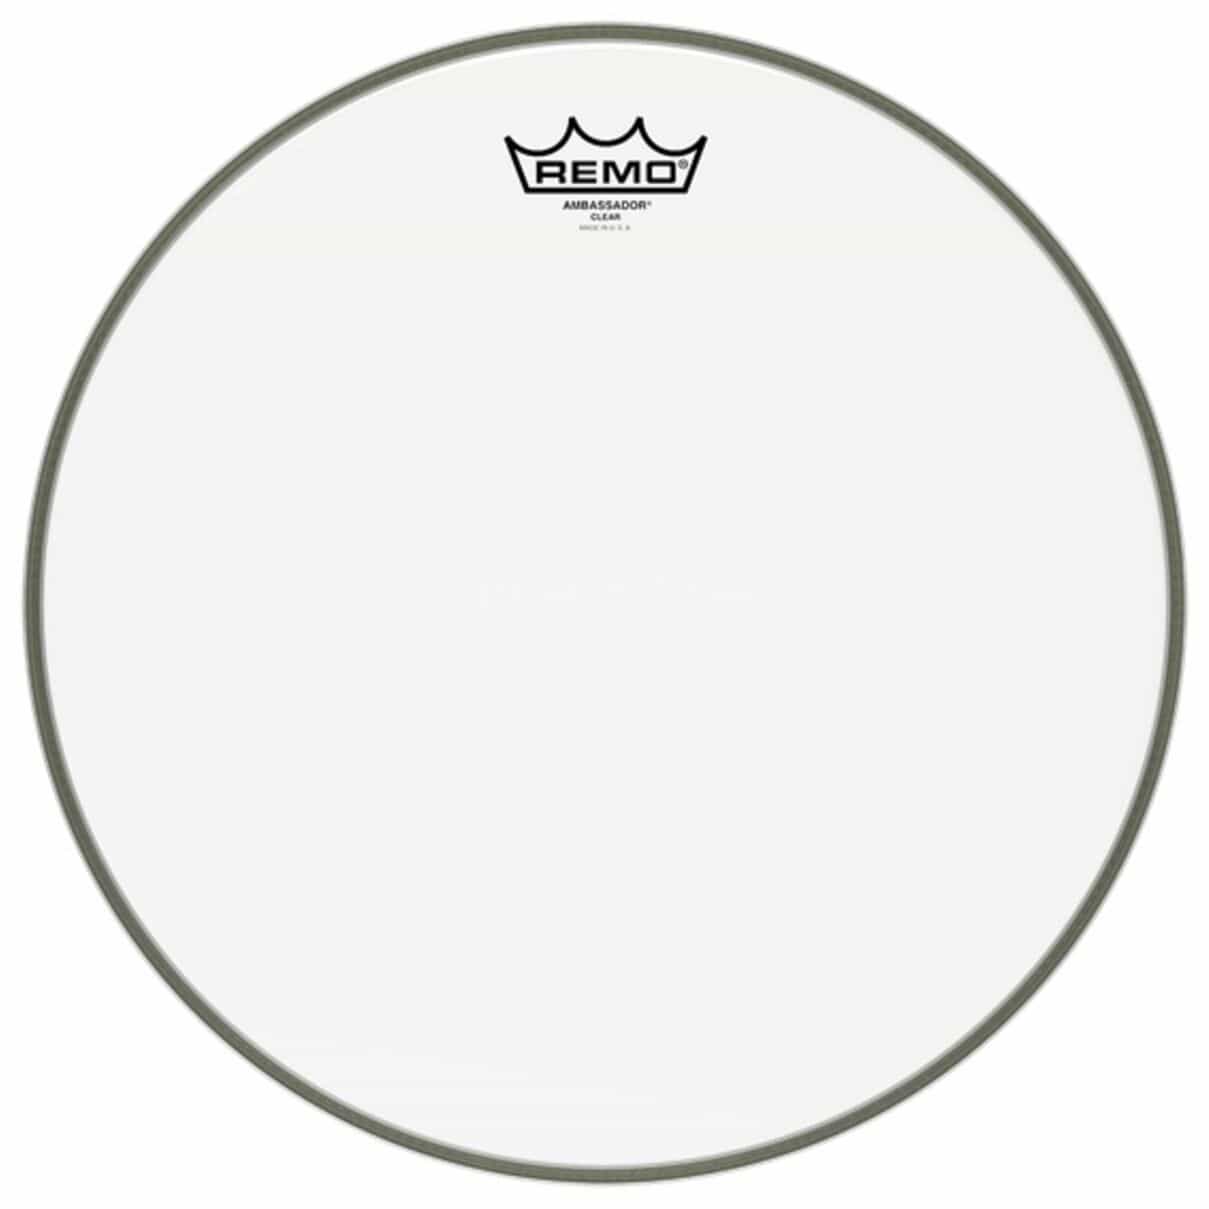 Remo Ambassador - Bass Drum Fell - 20  - Clear